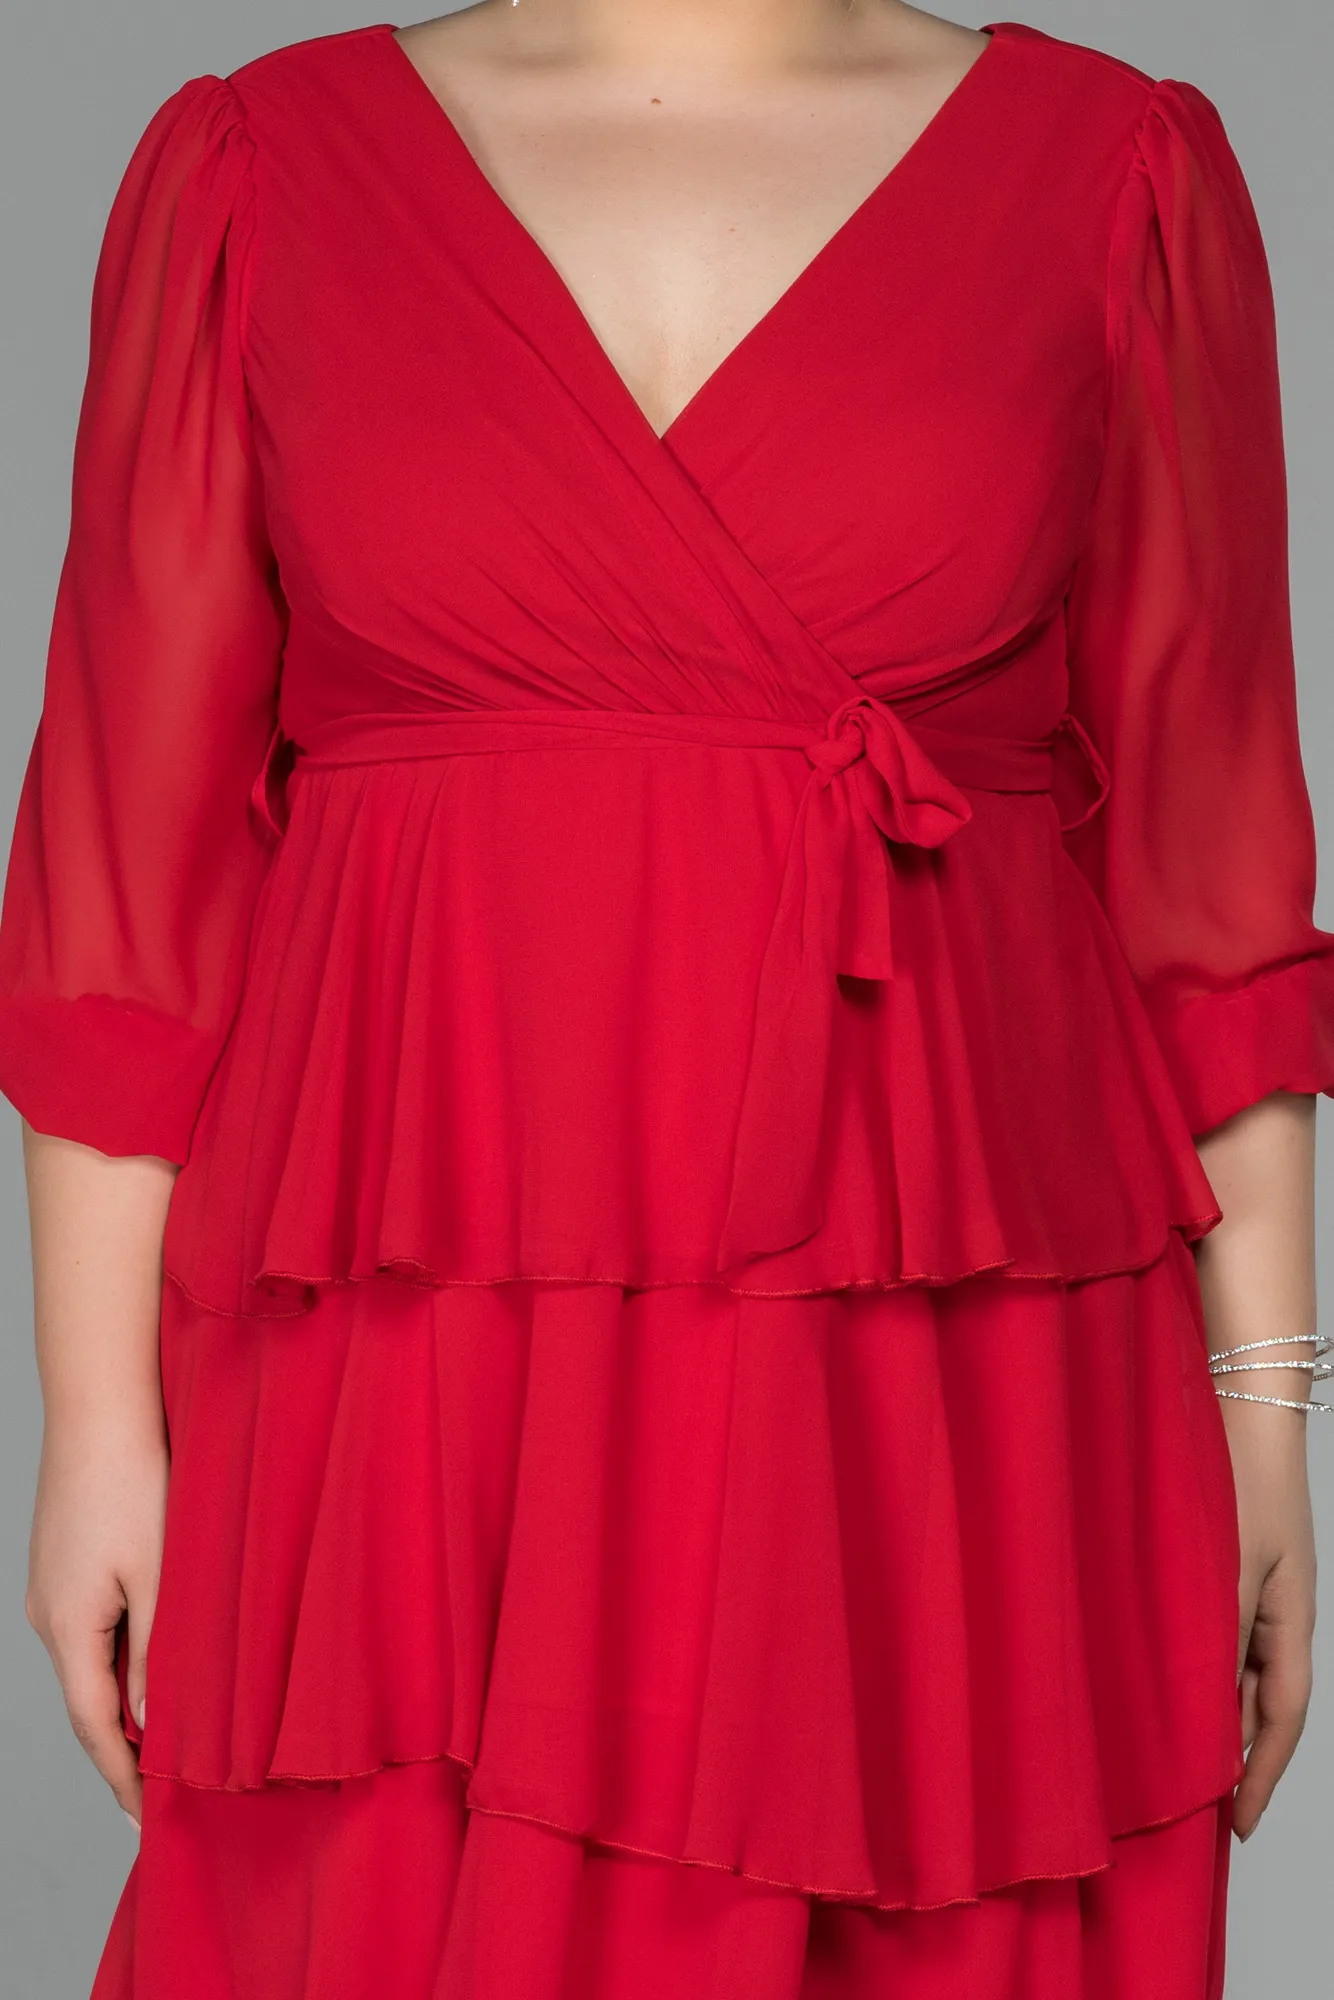 Red-Short Chiffon Oversized Evening Dress ABK1002